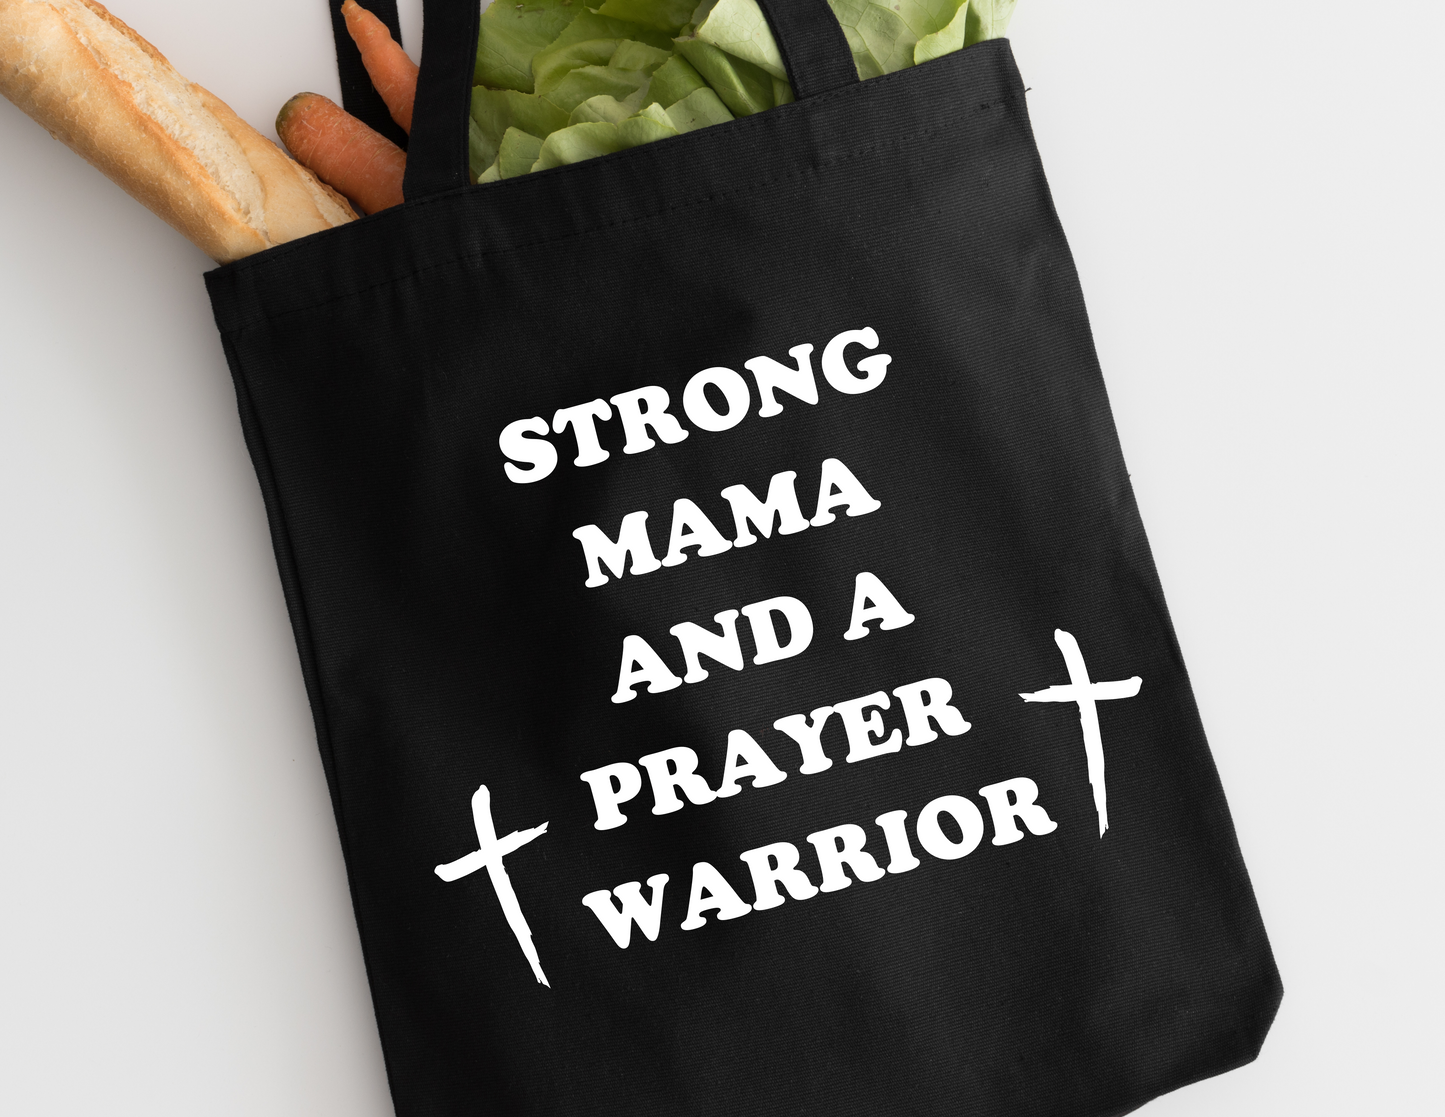 Strong Mama & Prayer Warrior Canvas Tote Bag